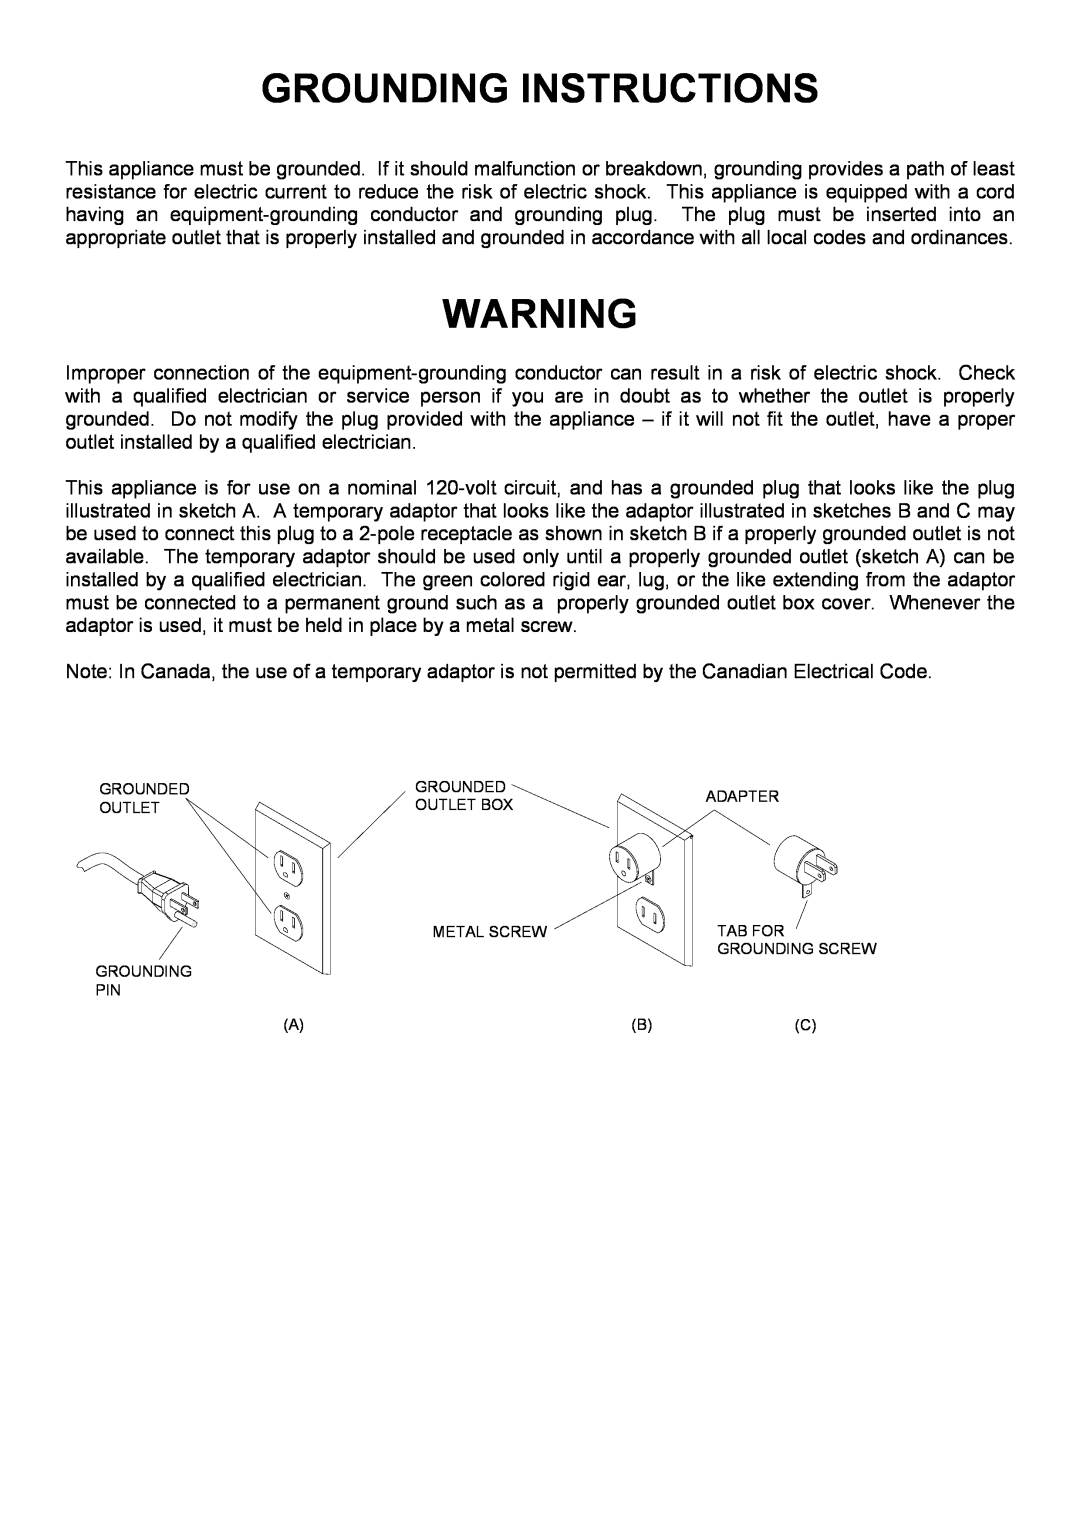 Windsor SRS12 manual Grounding Instructions, Grounded Outlet Grounding Pin A, Grounded Outlet Box Metal Screw 